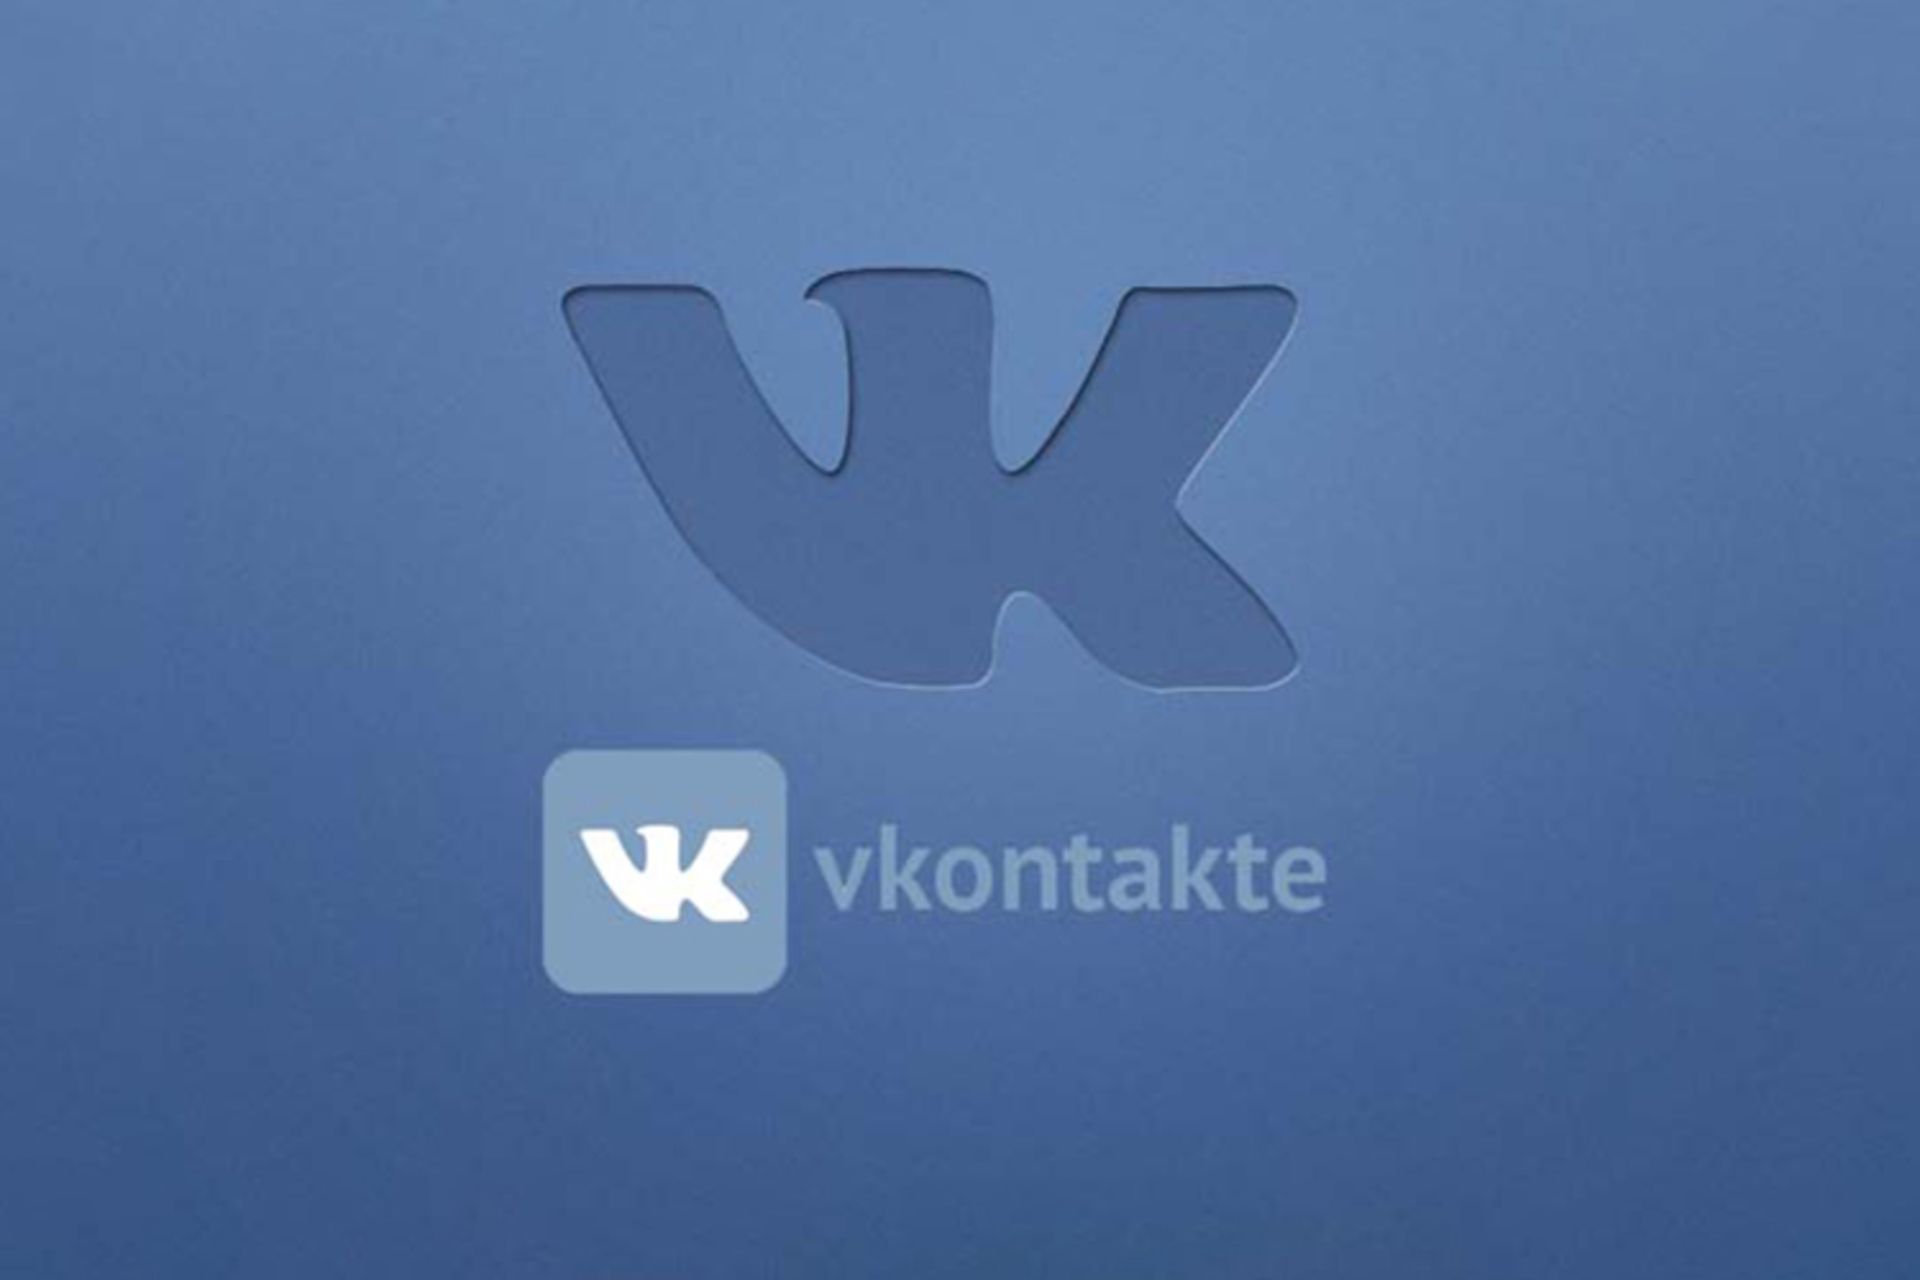 شبکه اجتماعی vkontakte 